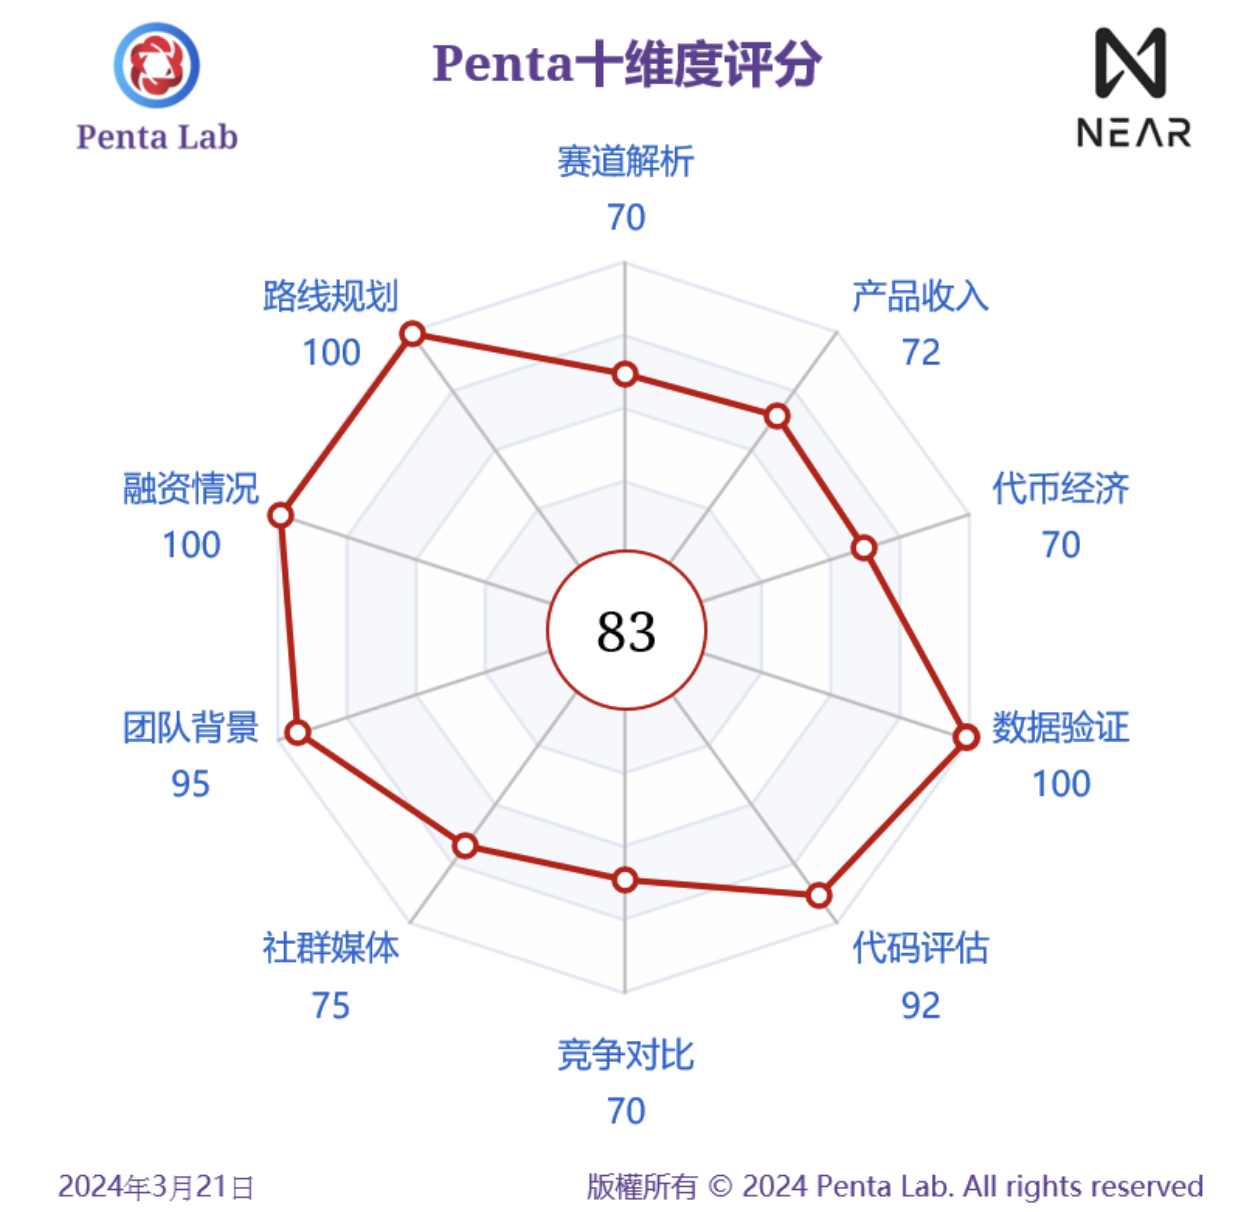 Penta Lab 研报 Top 30 系列 - NEAR - 市值上升空间 114%